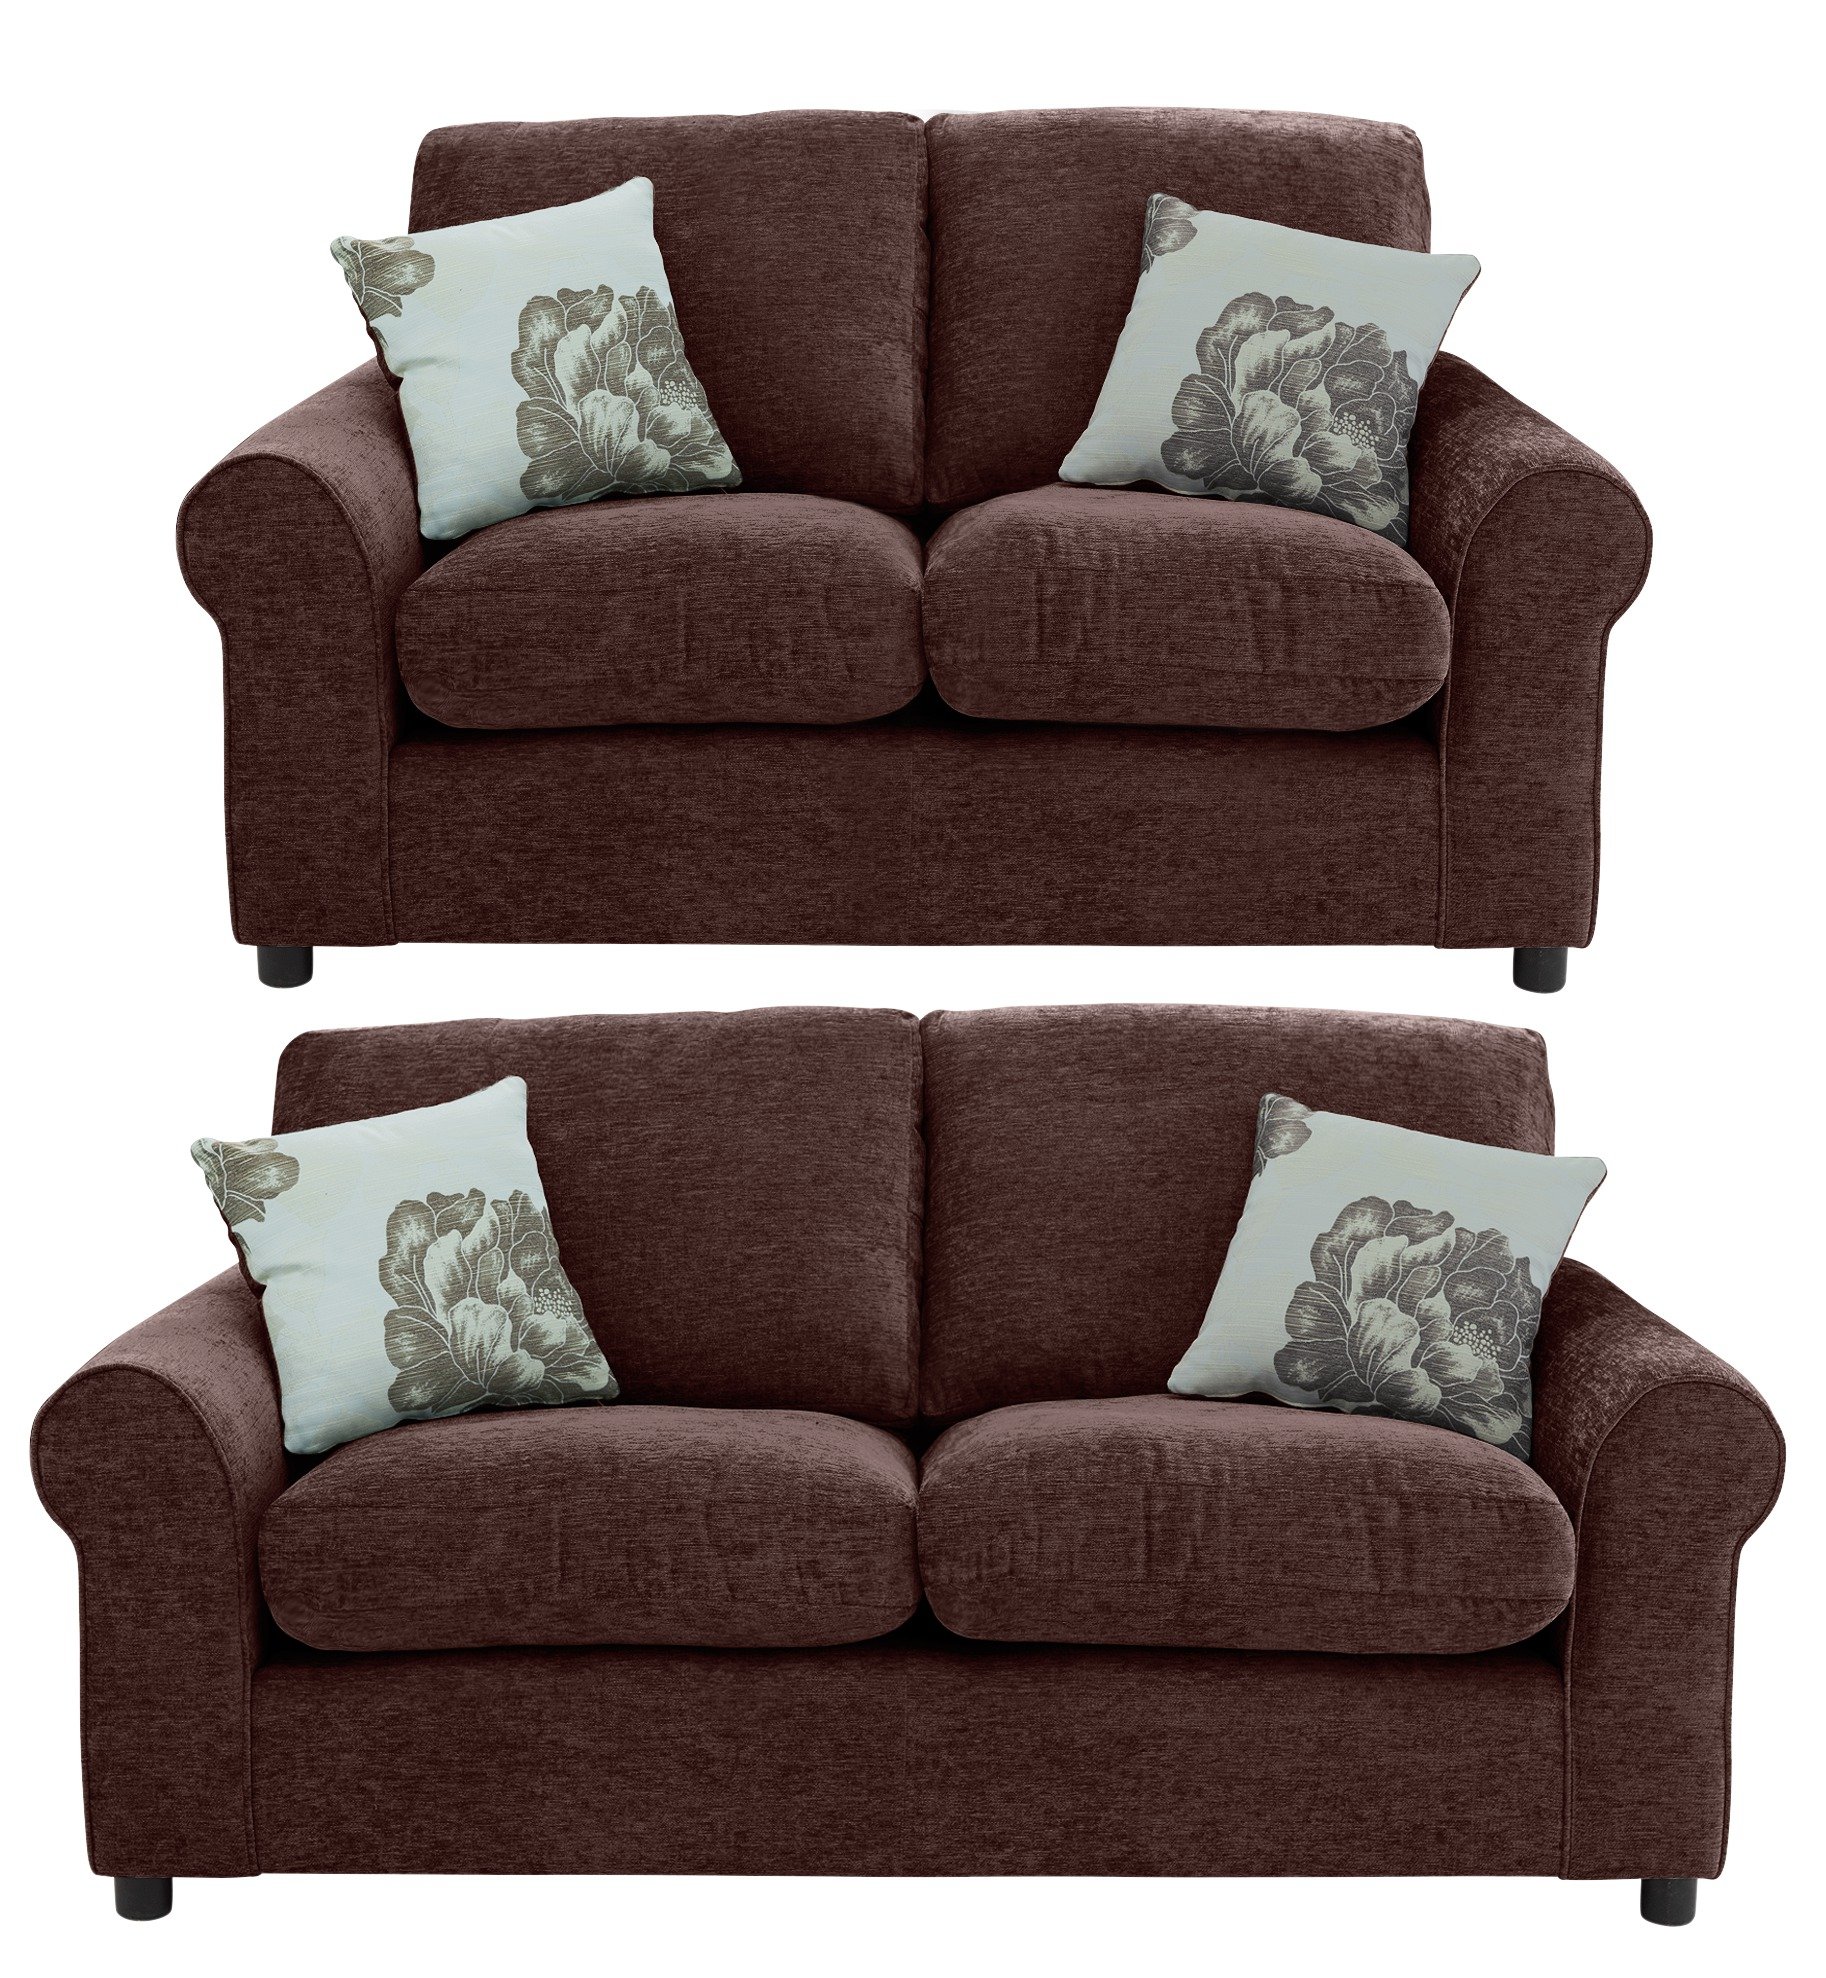 Argos Home Tessa Fabric 3 Seat & Compact 3 Seat Sofa - Choc